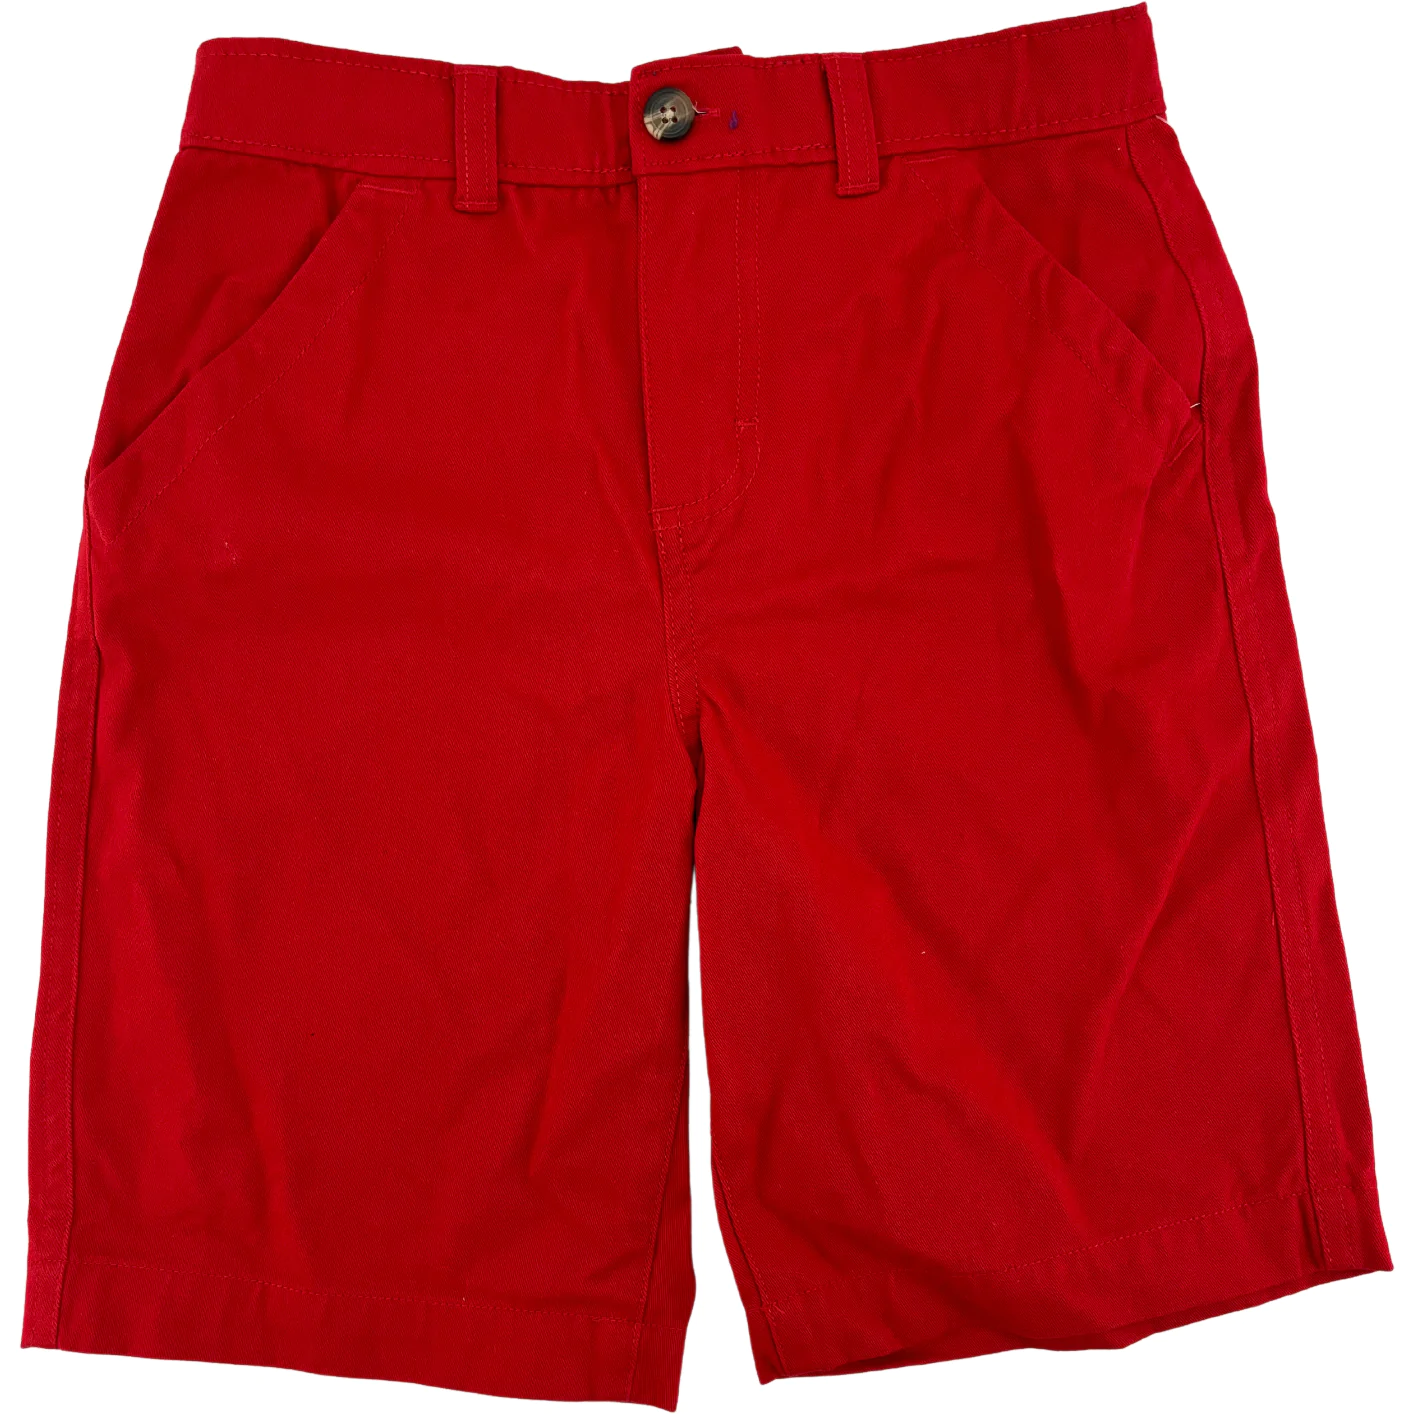 Toughskins Children's Shorts / Boy's Summer Shorts / Red / Size Large